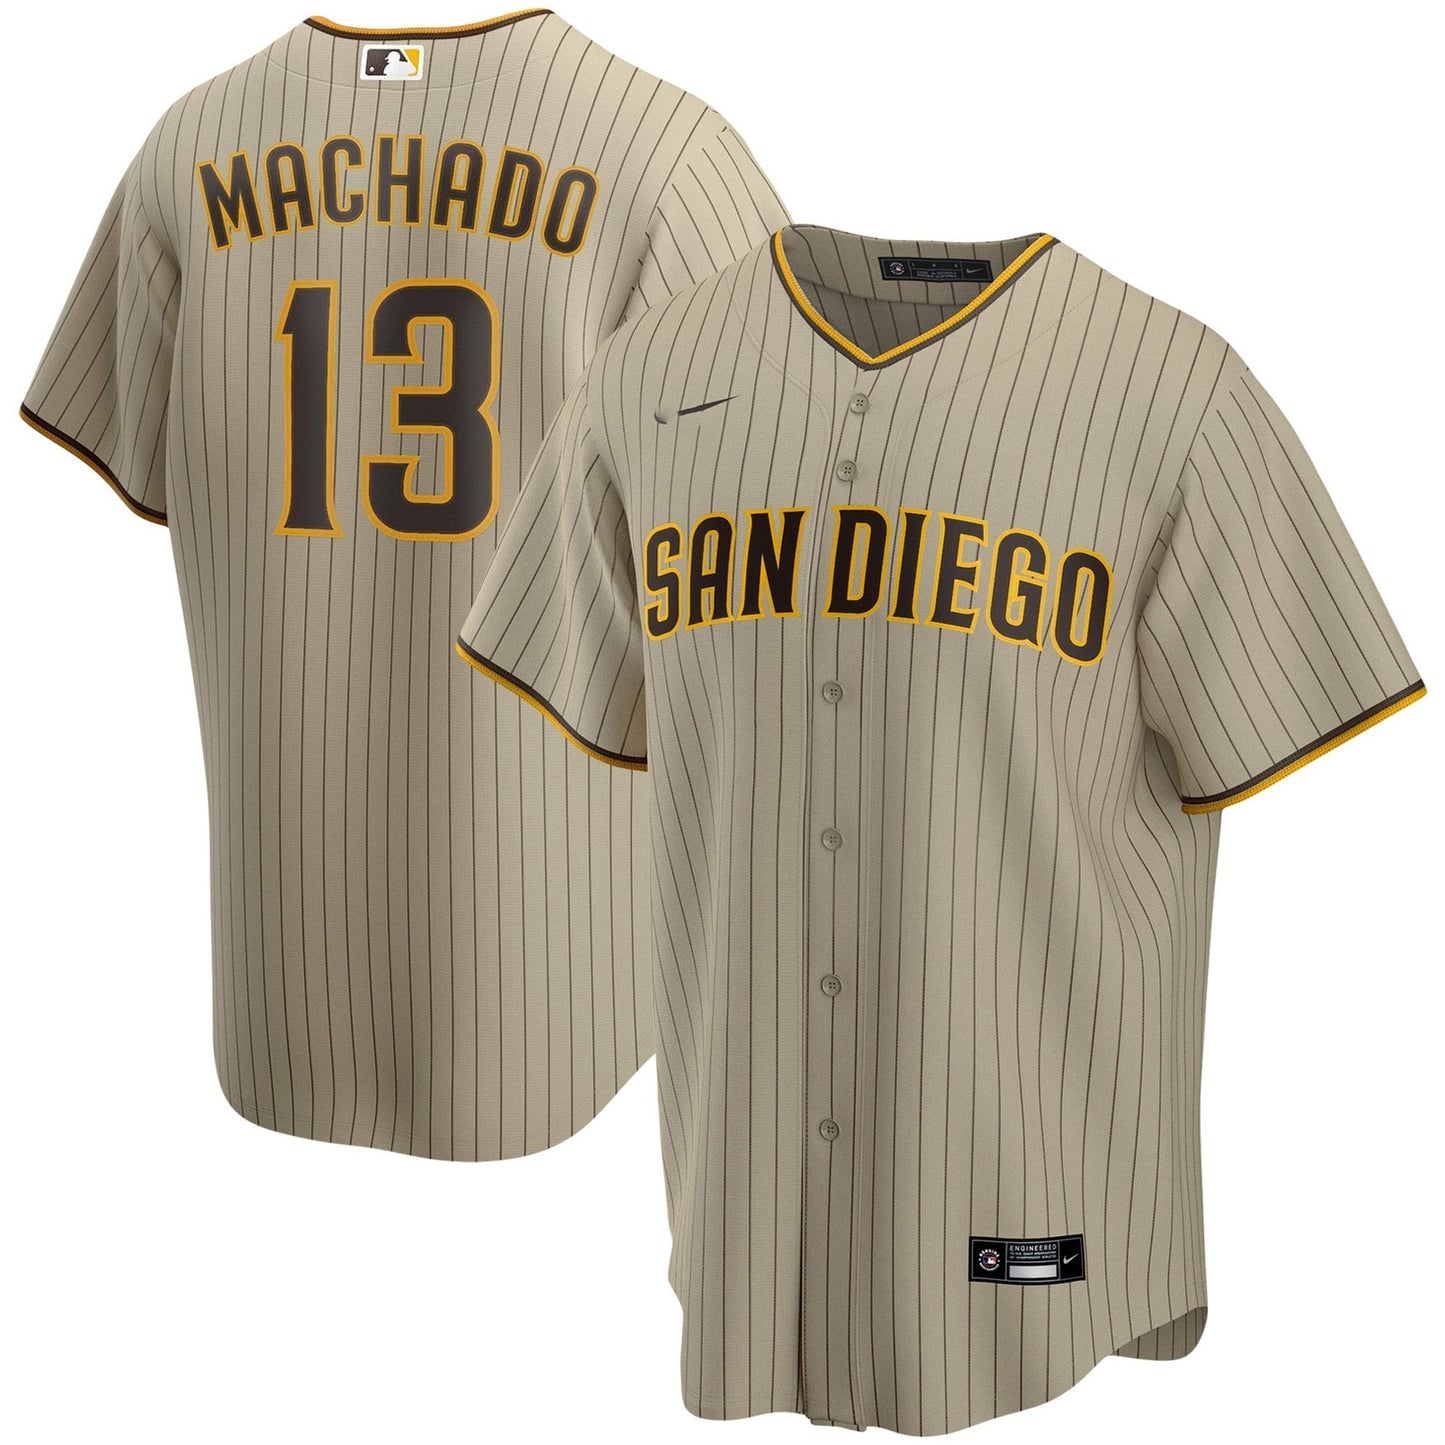 Mlb Baseball San Diego Padres Tati Jr. Machado